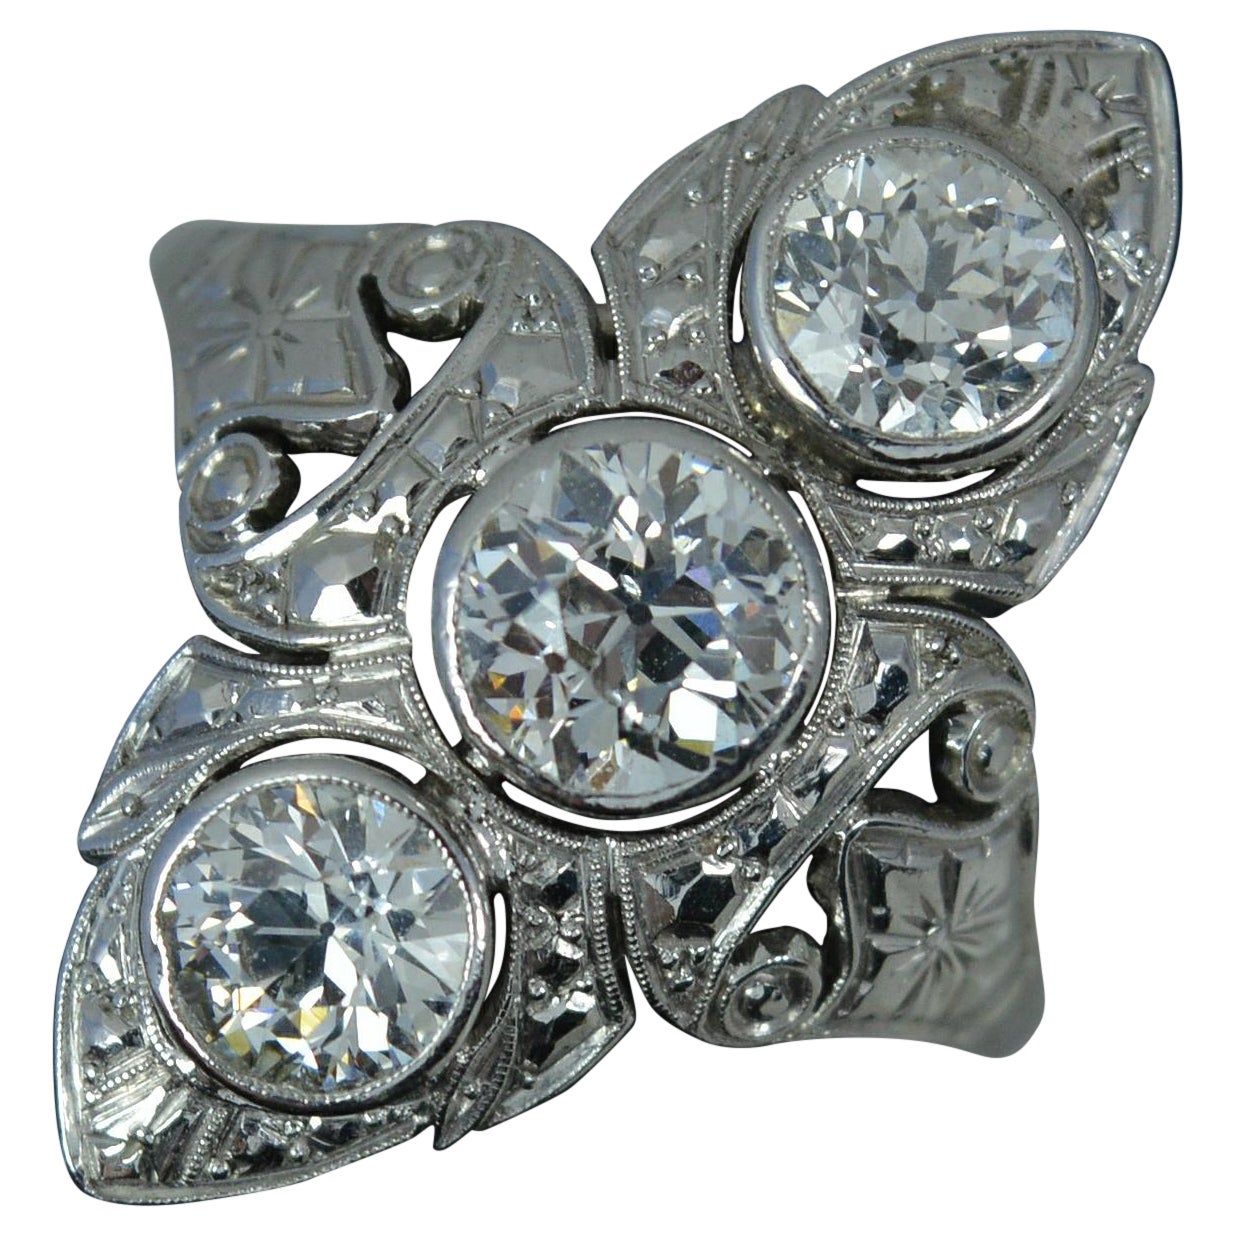 Beautiful Edwardian 2.1ct Old Cut Diamond and Platinum Trilogy Panel Ring